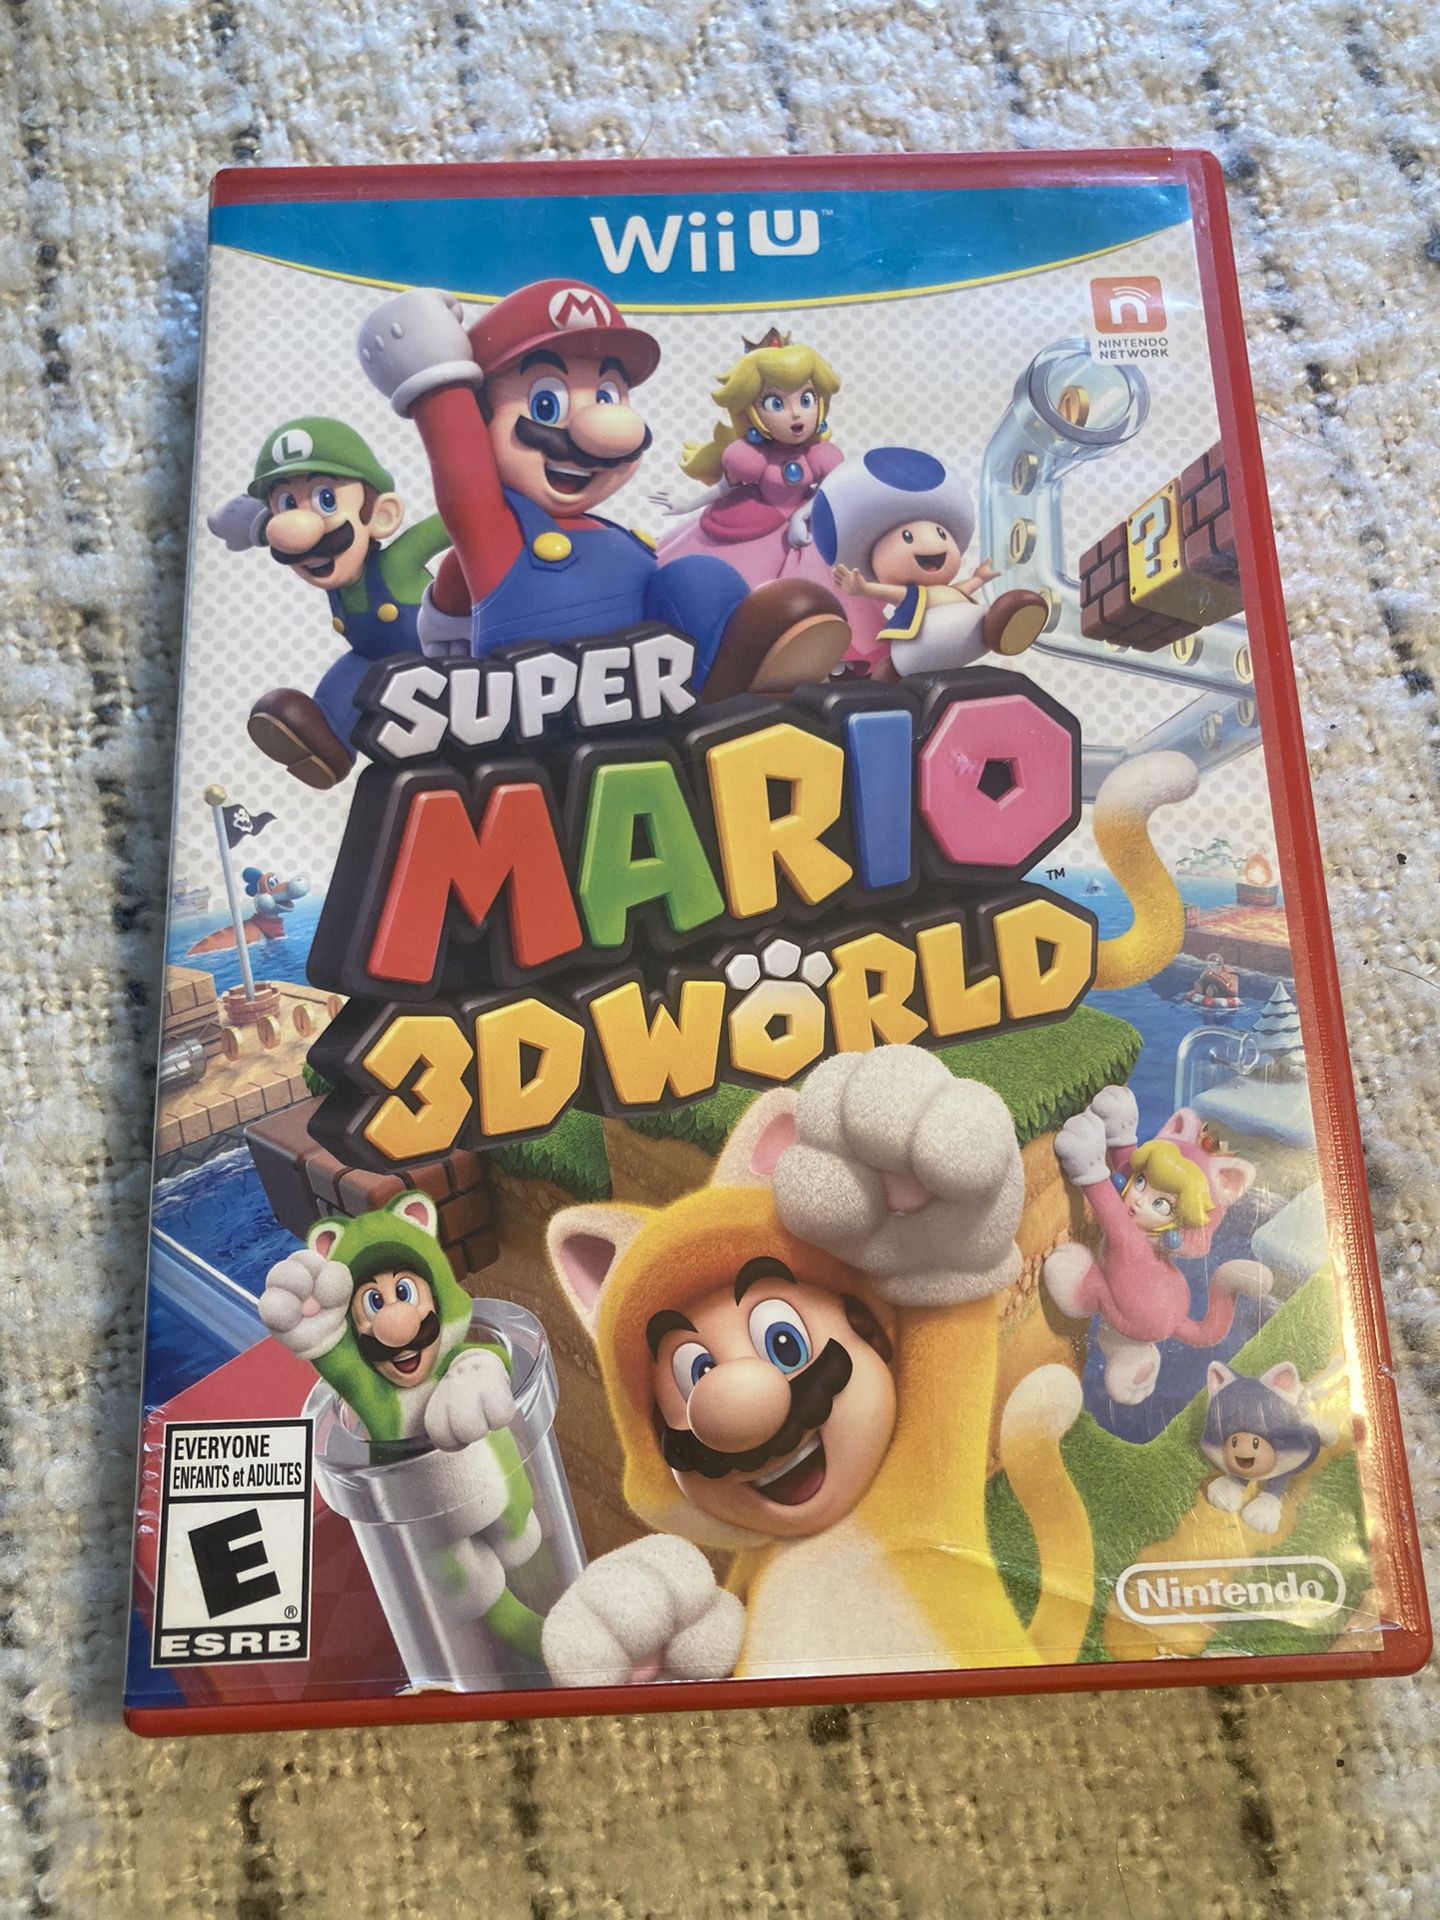 Super Mario 3D World for Nintendo Wii U